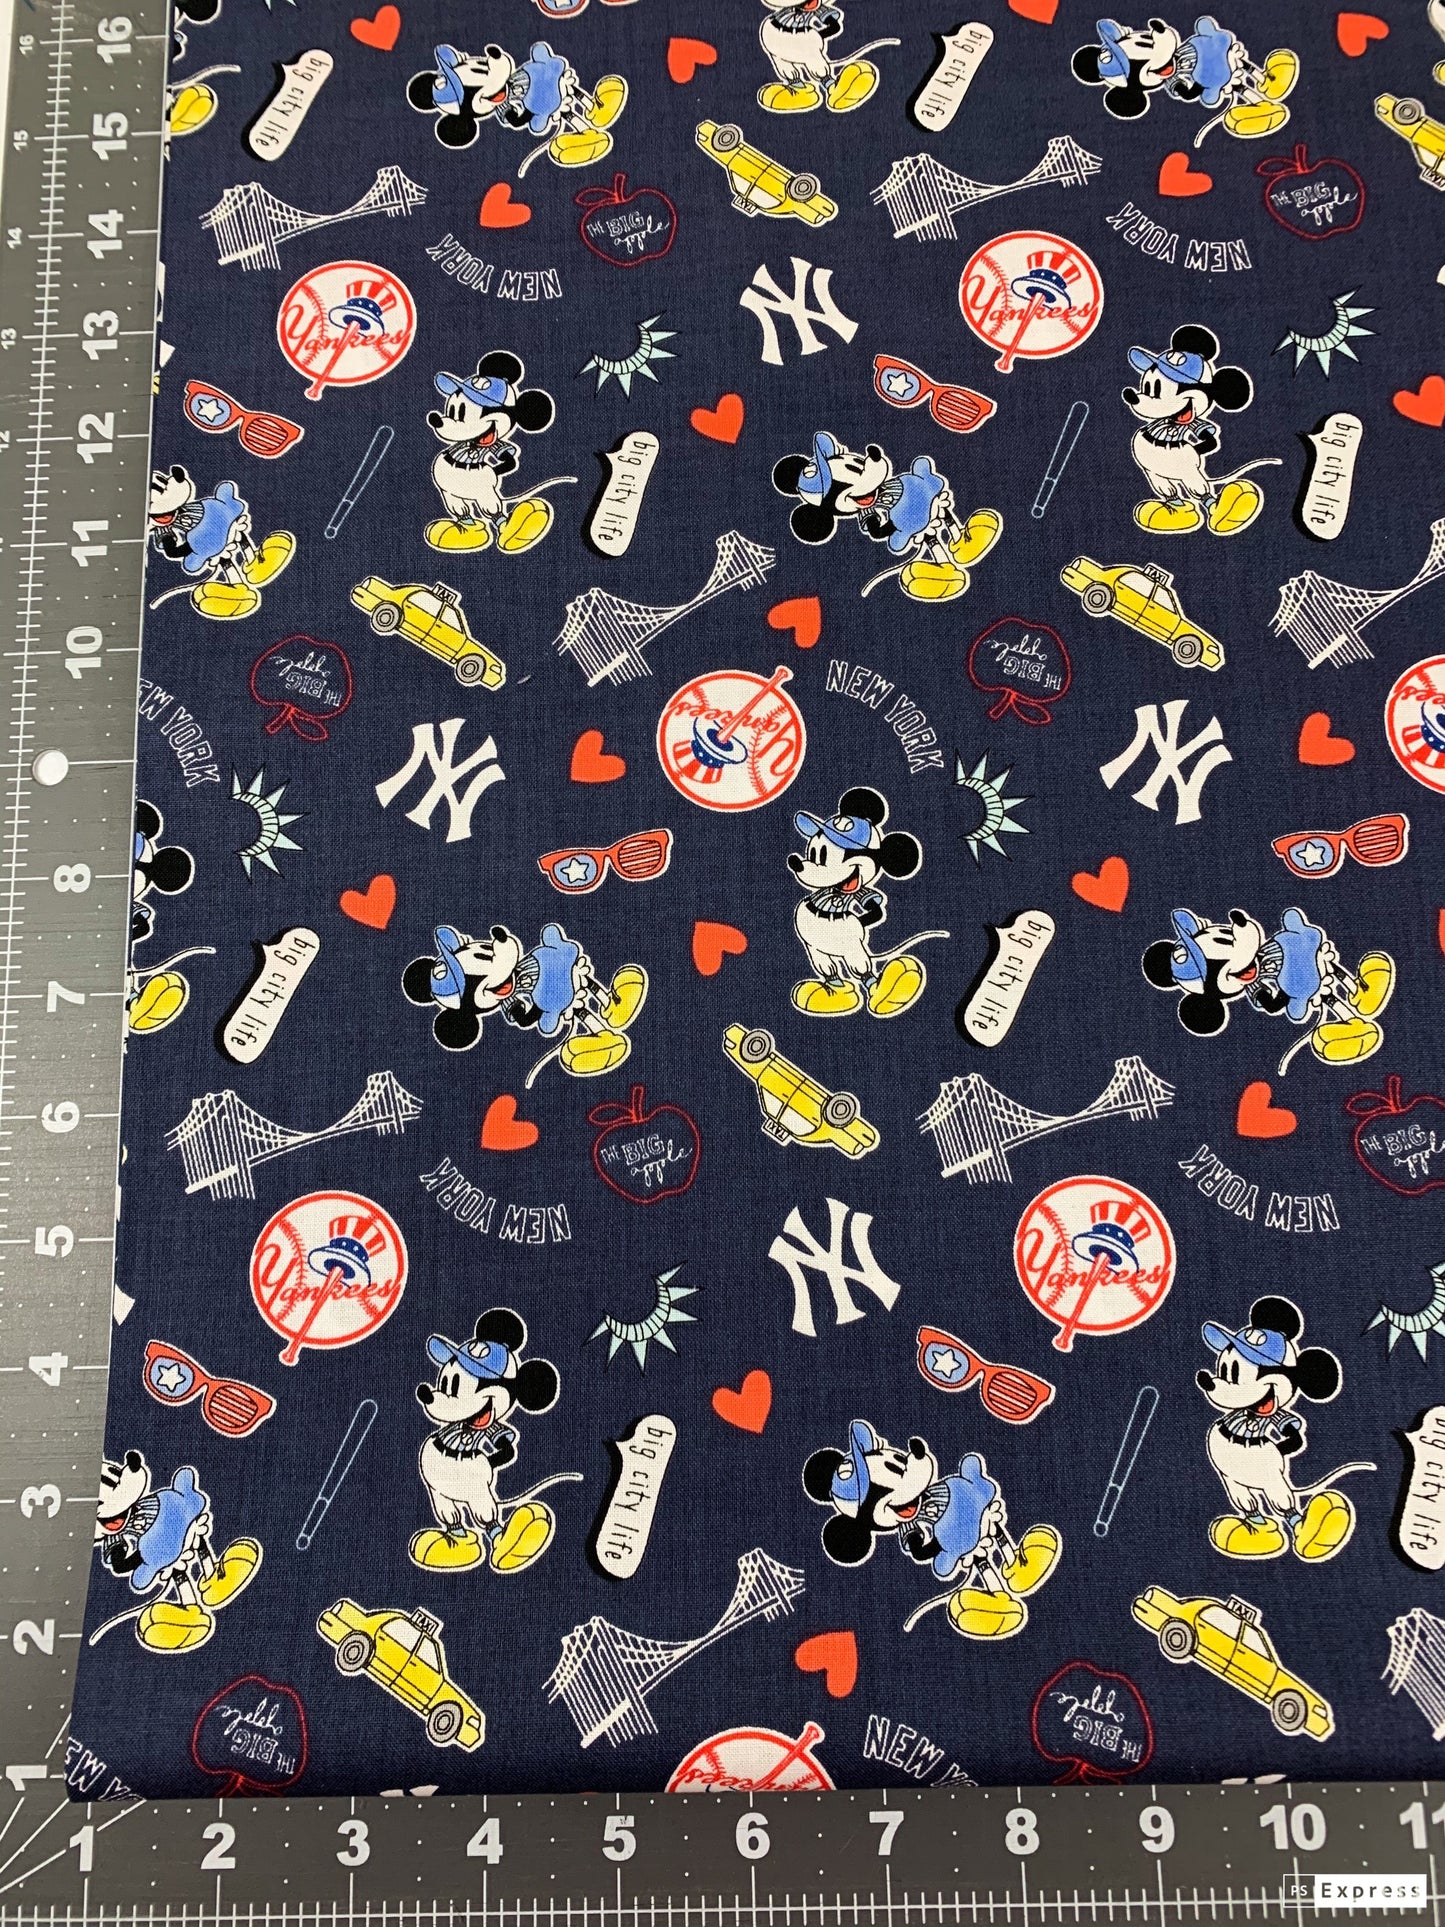 New York Yankees fabric Mickey cotton fabric